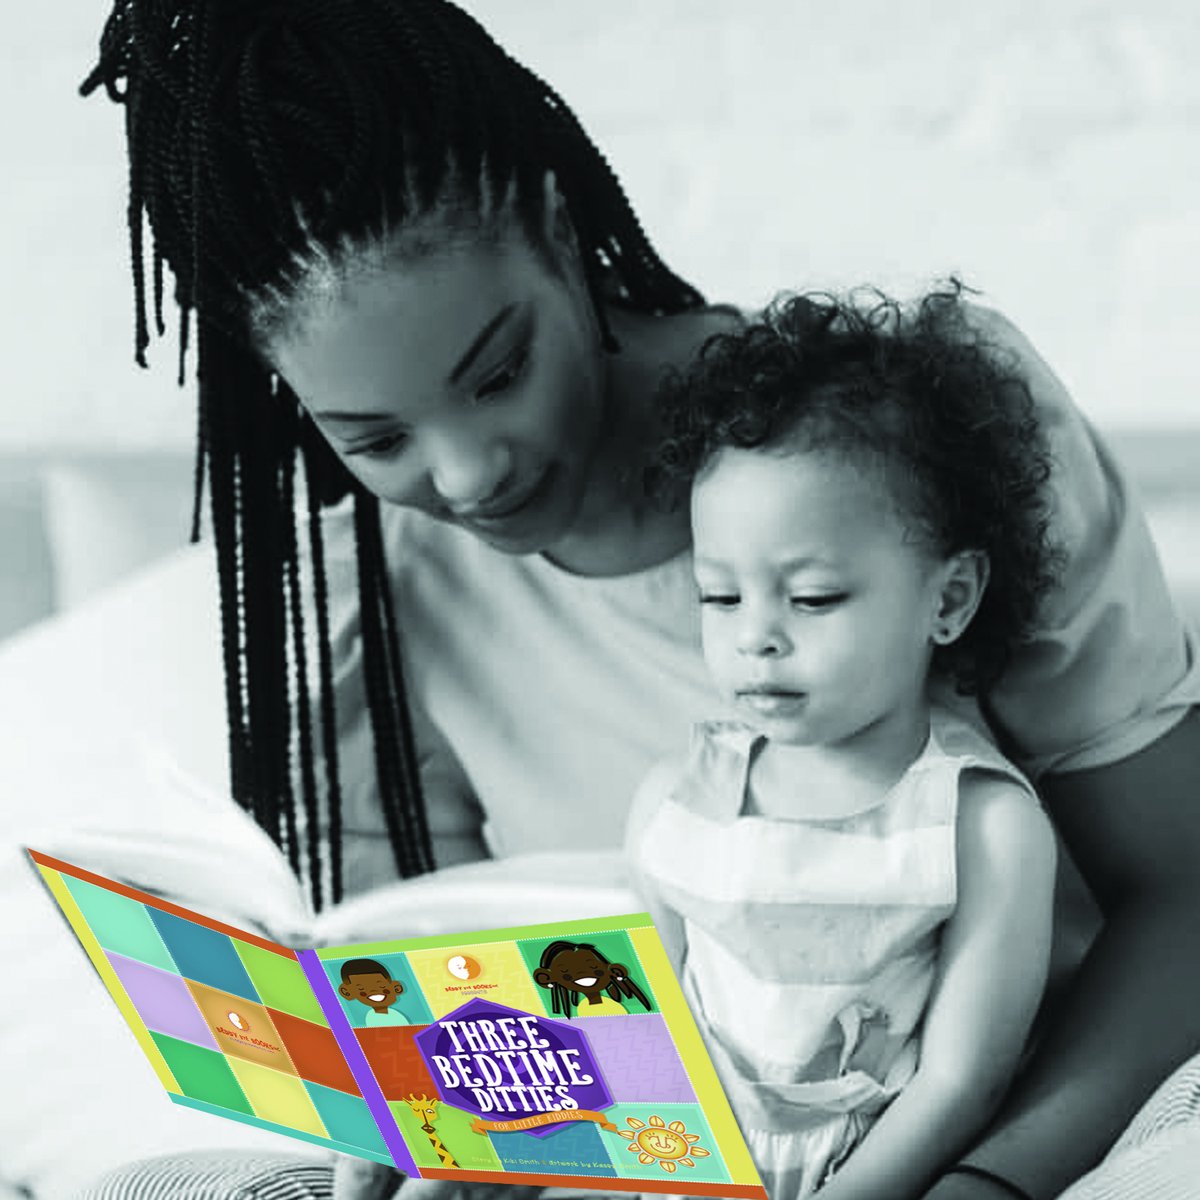 Thank you MOM beddybyebooksinc.com #ChildrensBooks #KidLit #PictureBooks #ChildrensAuthors #KidsBooks #ReadAloud #BookishKids #Storytime #YoungReaders #ChildrensLiterature